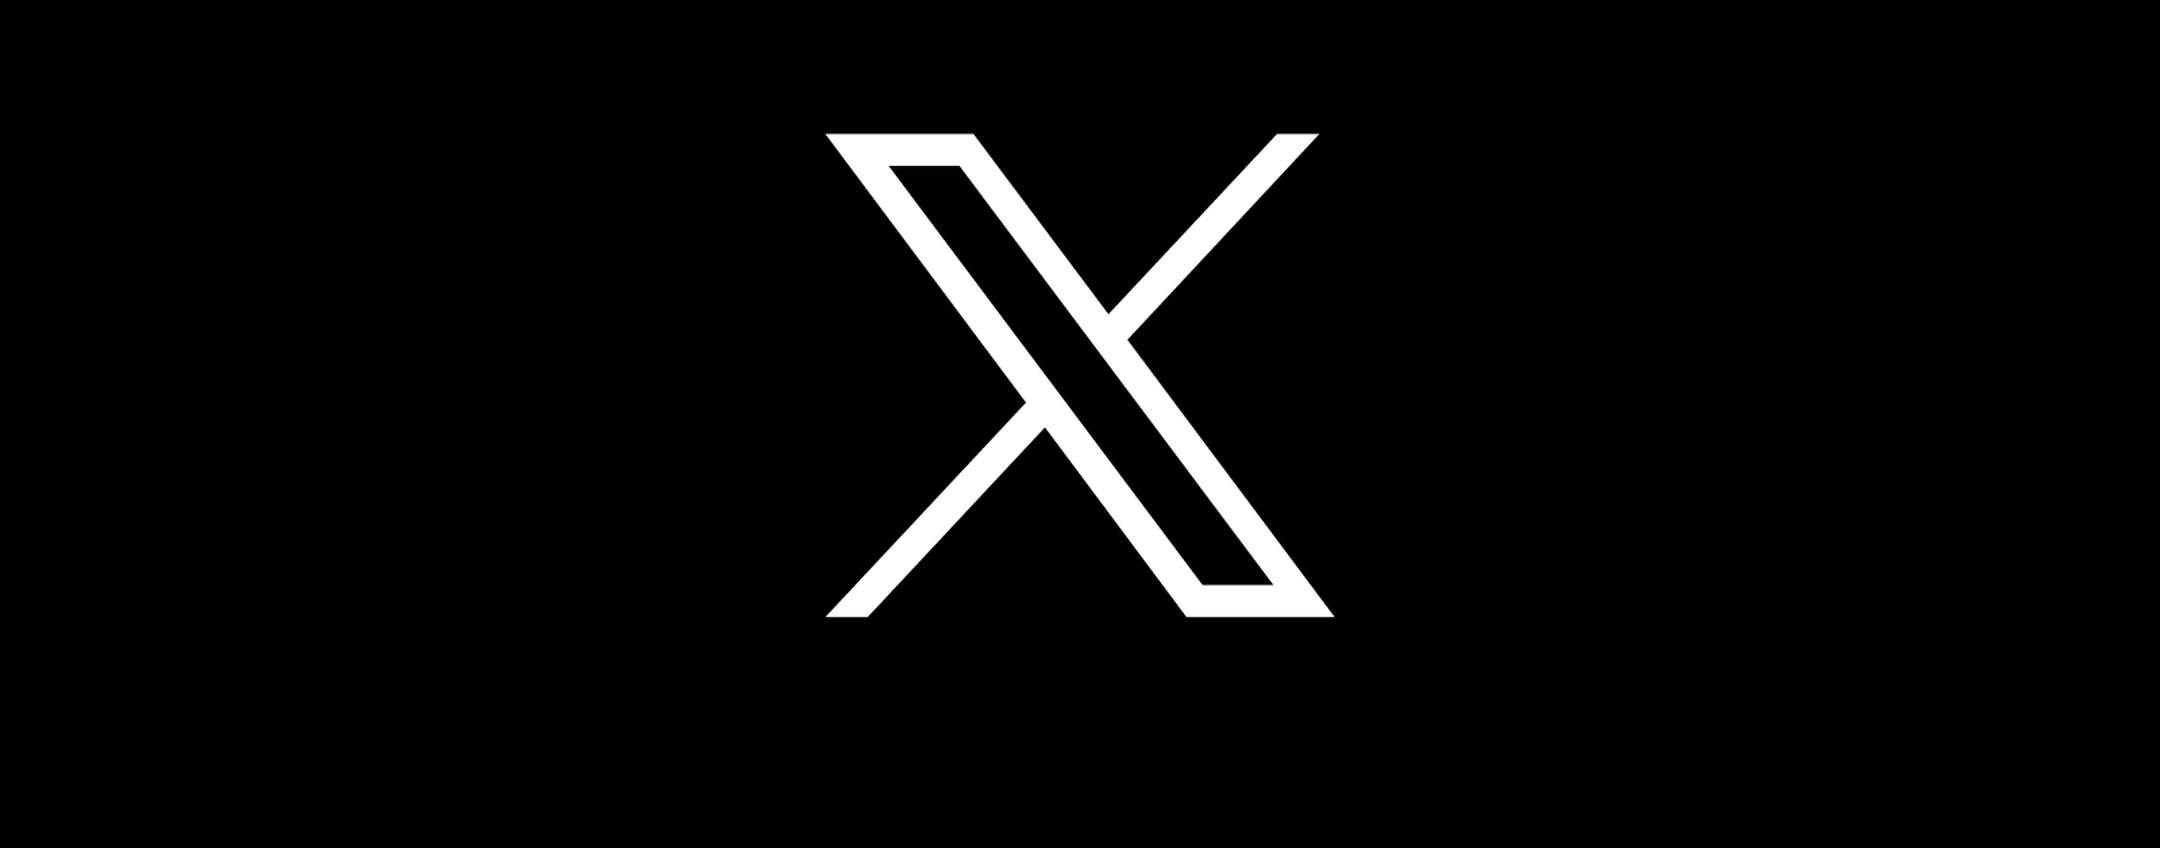 X - logo Twitter